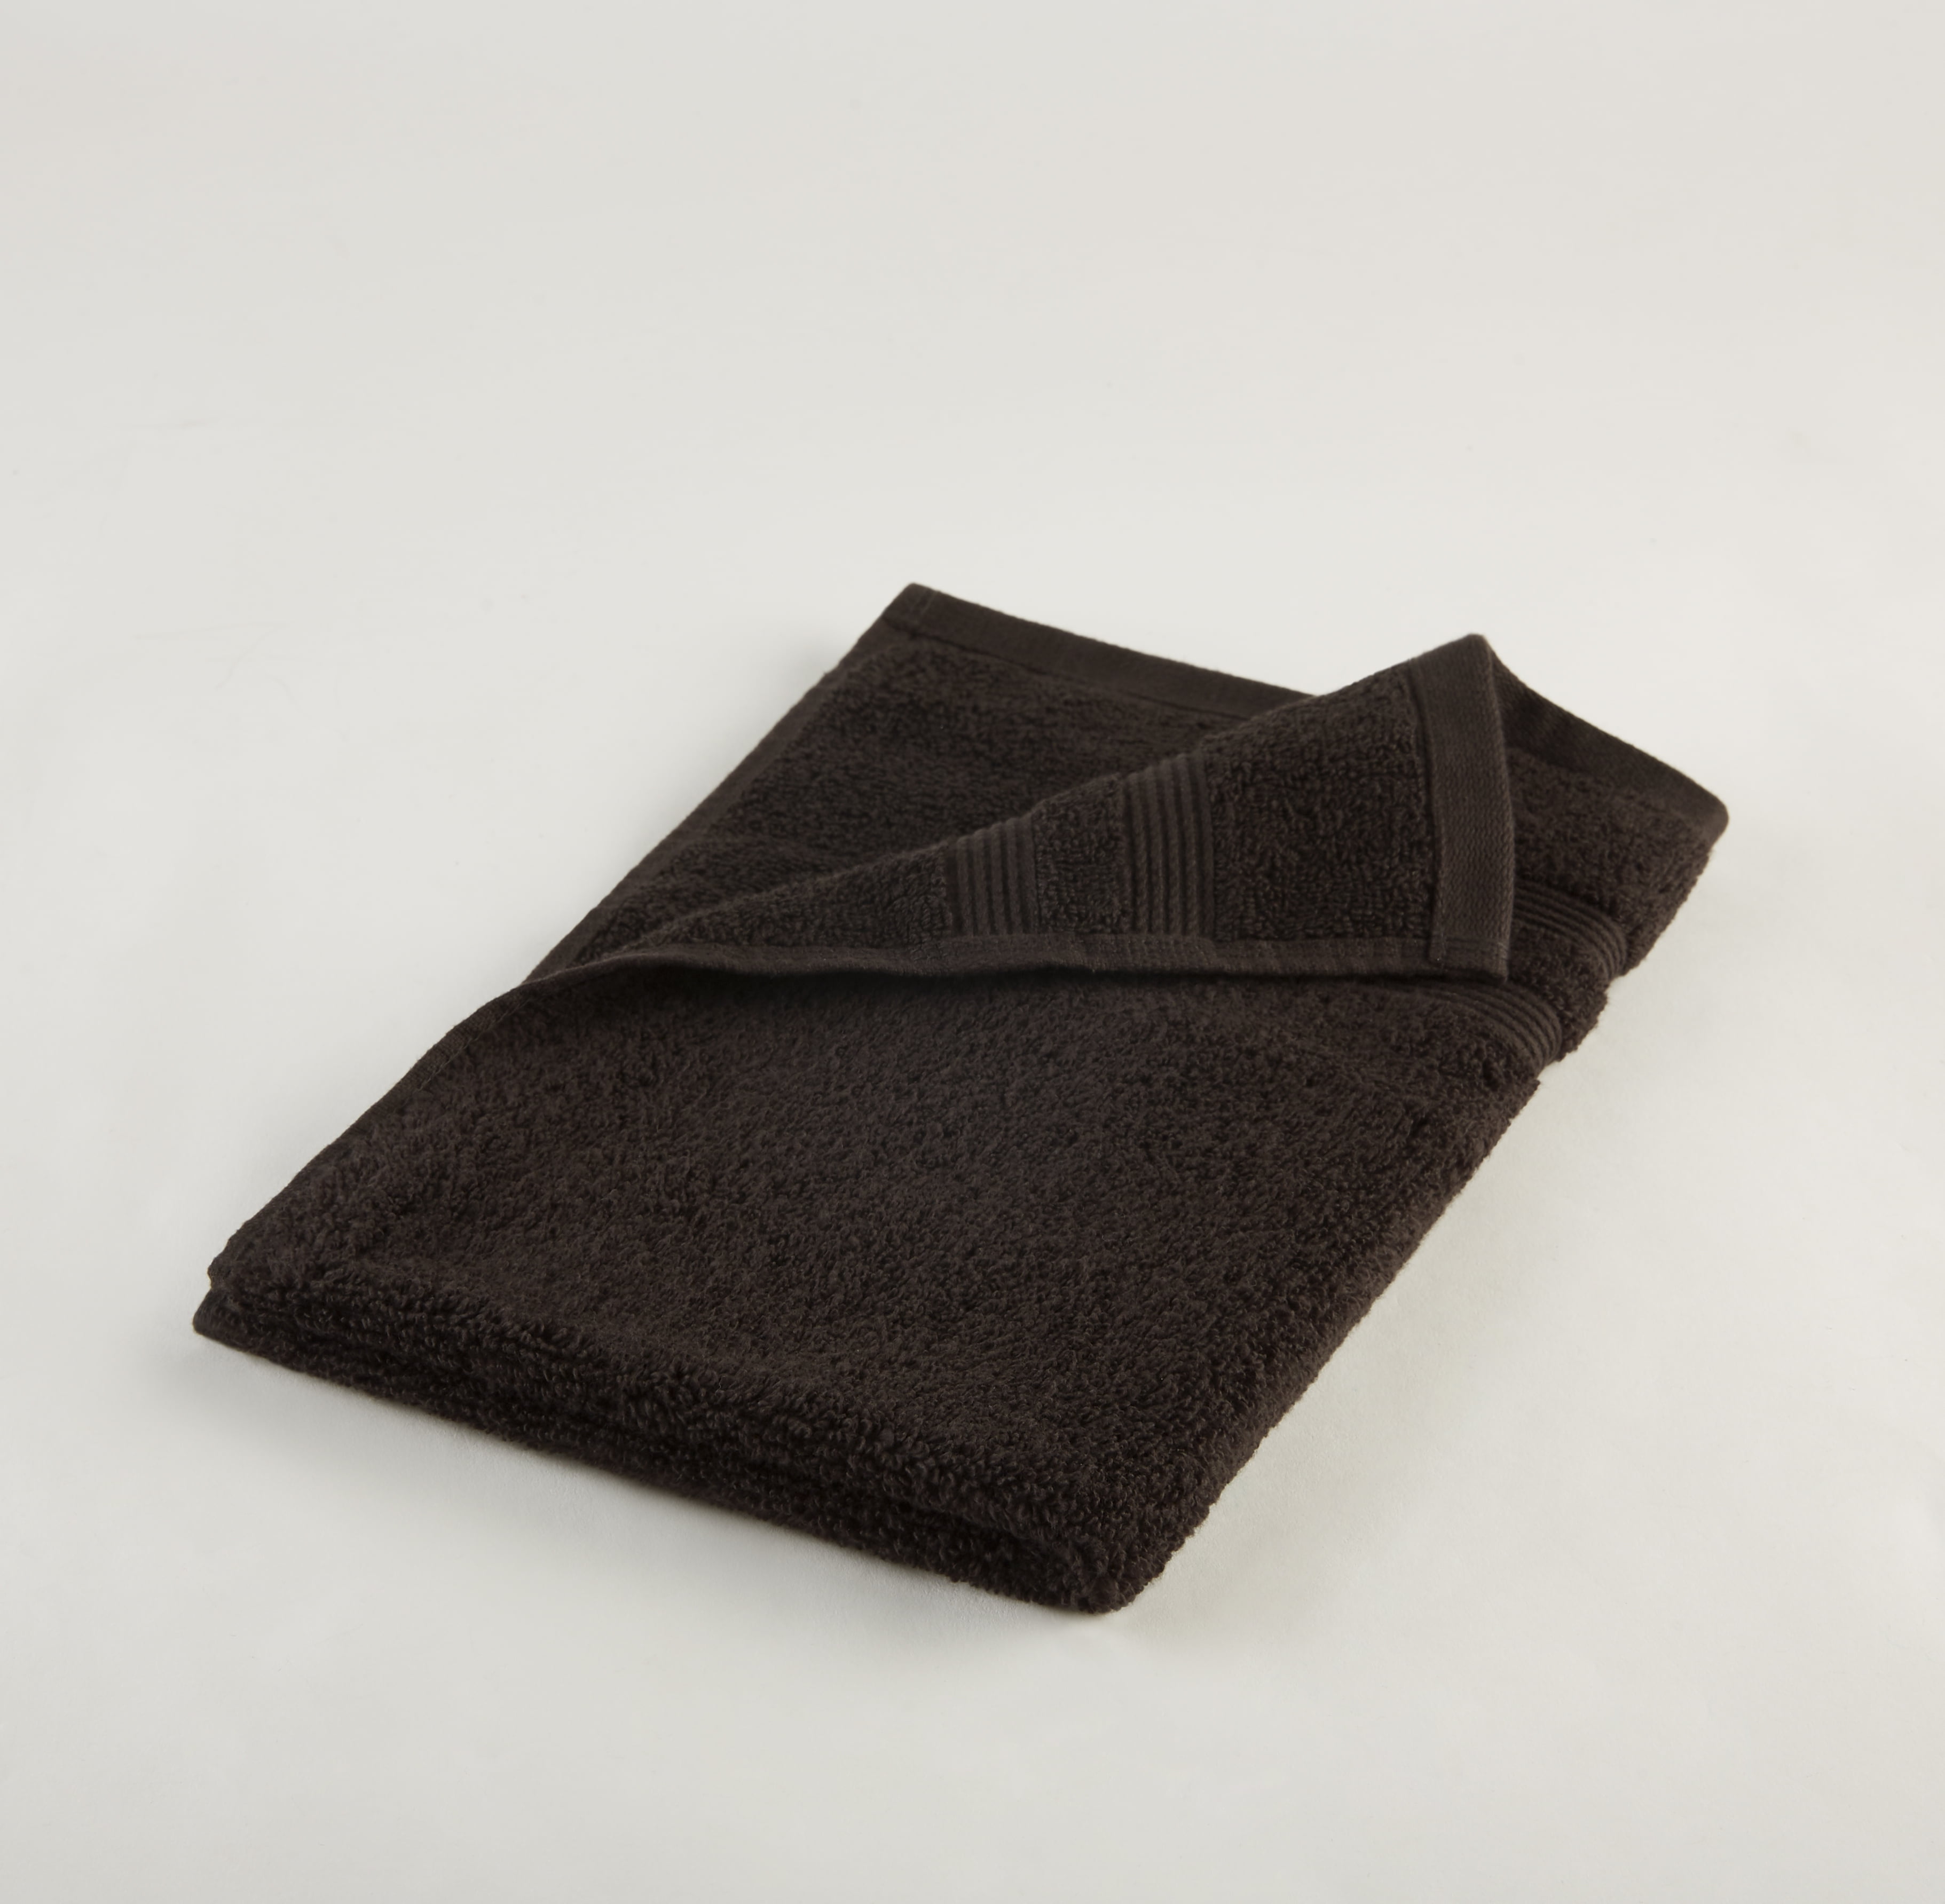 Mainstays 4-Pack 16”x26” Woven Kitchen Towel Set, Rich Black